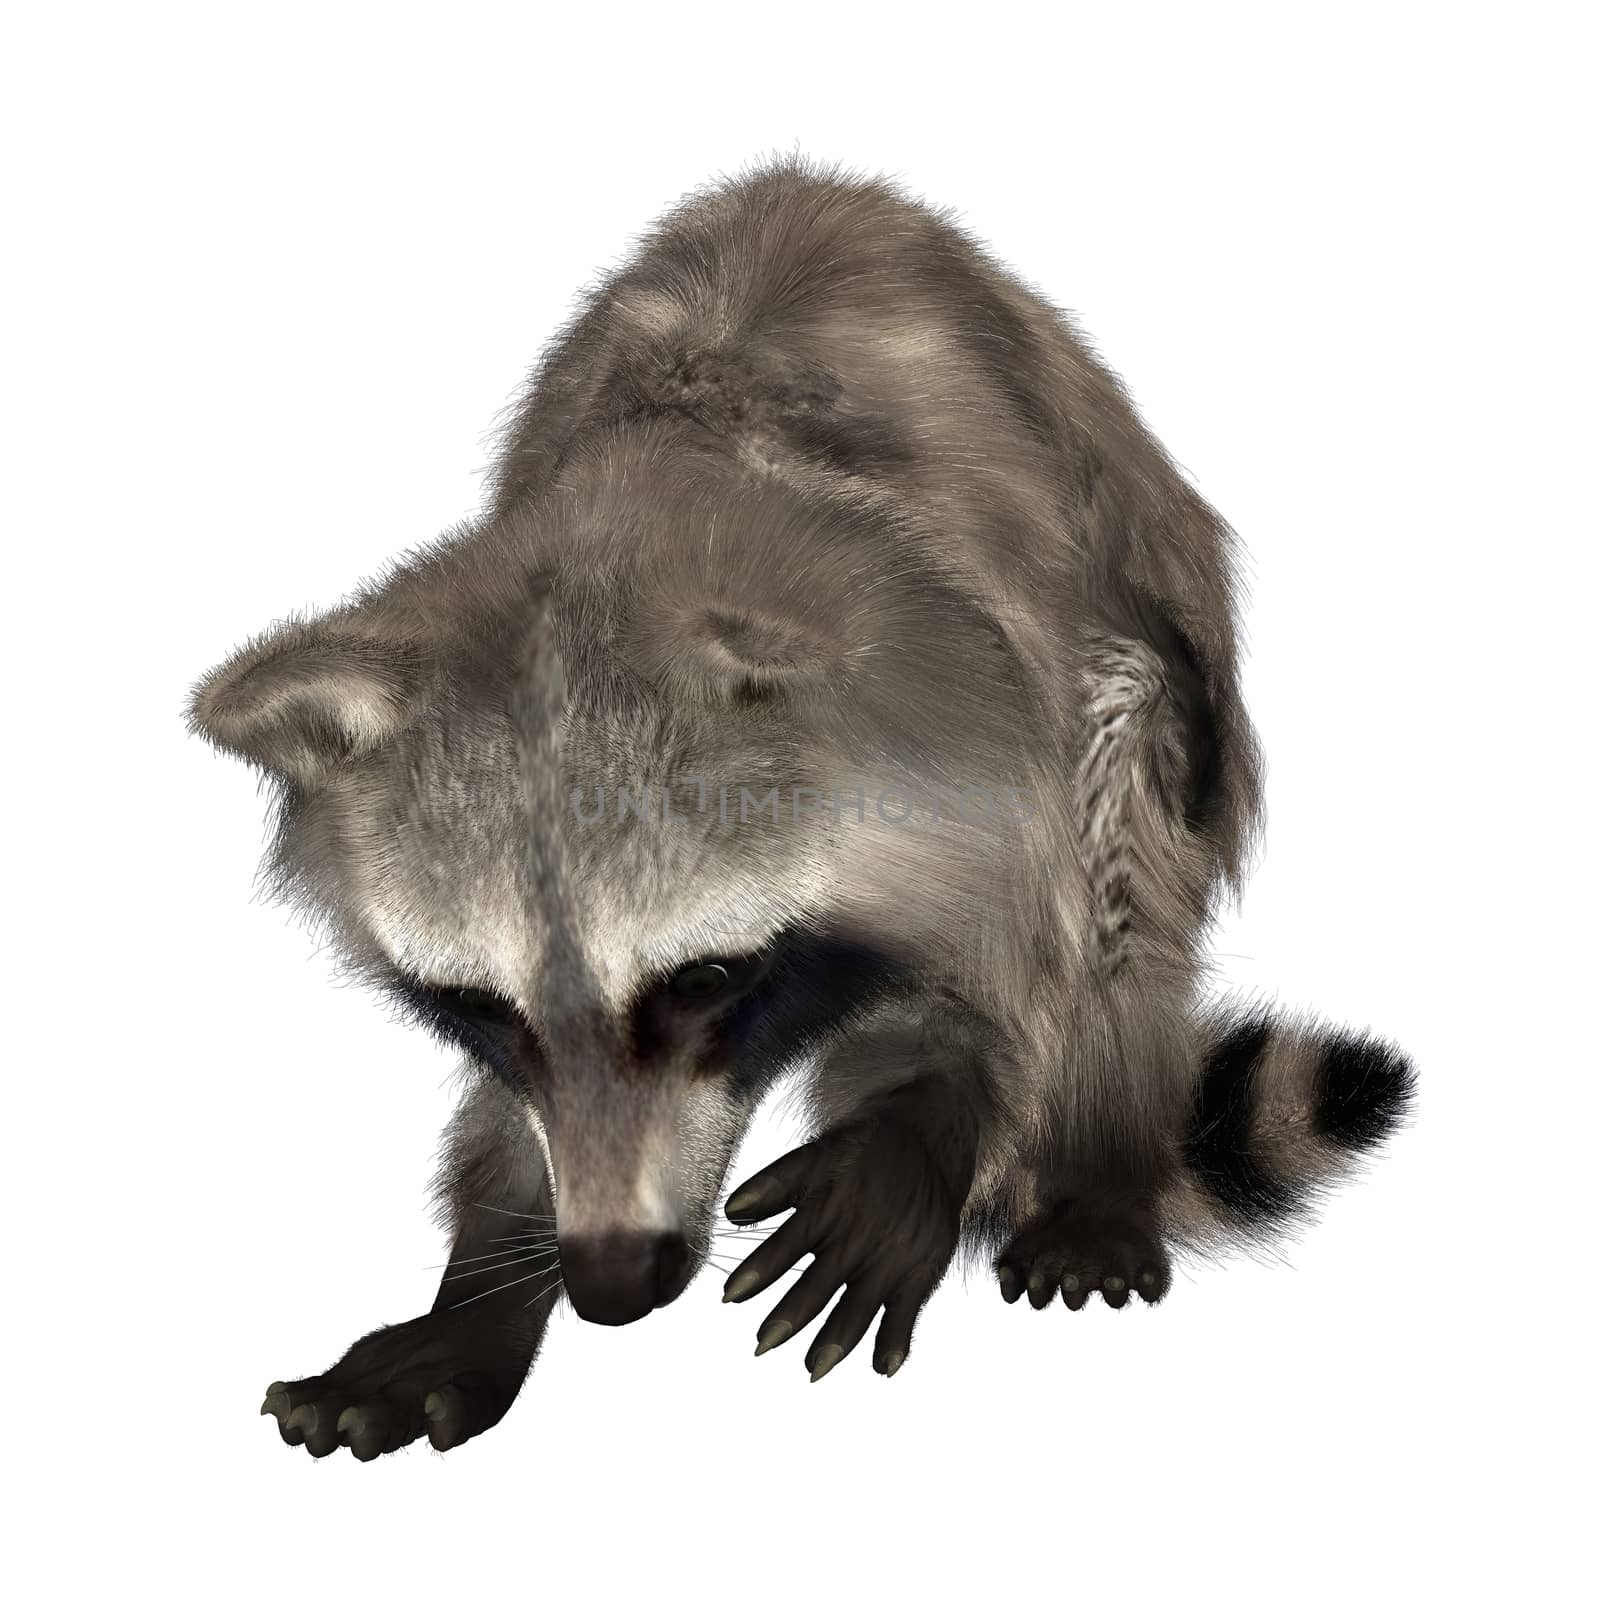 Raccoon by Vac